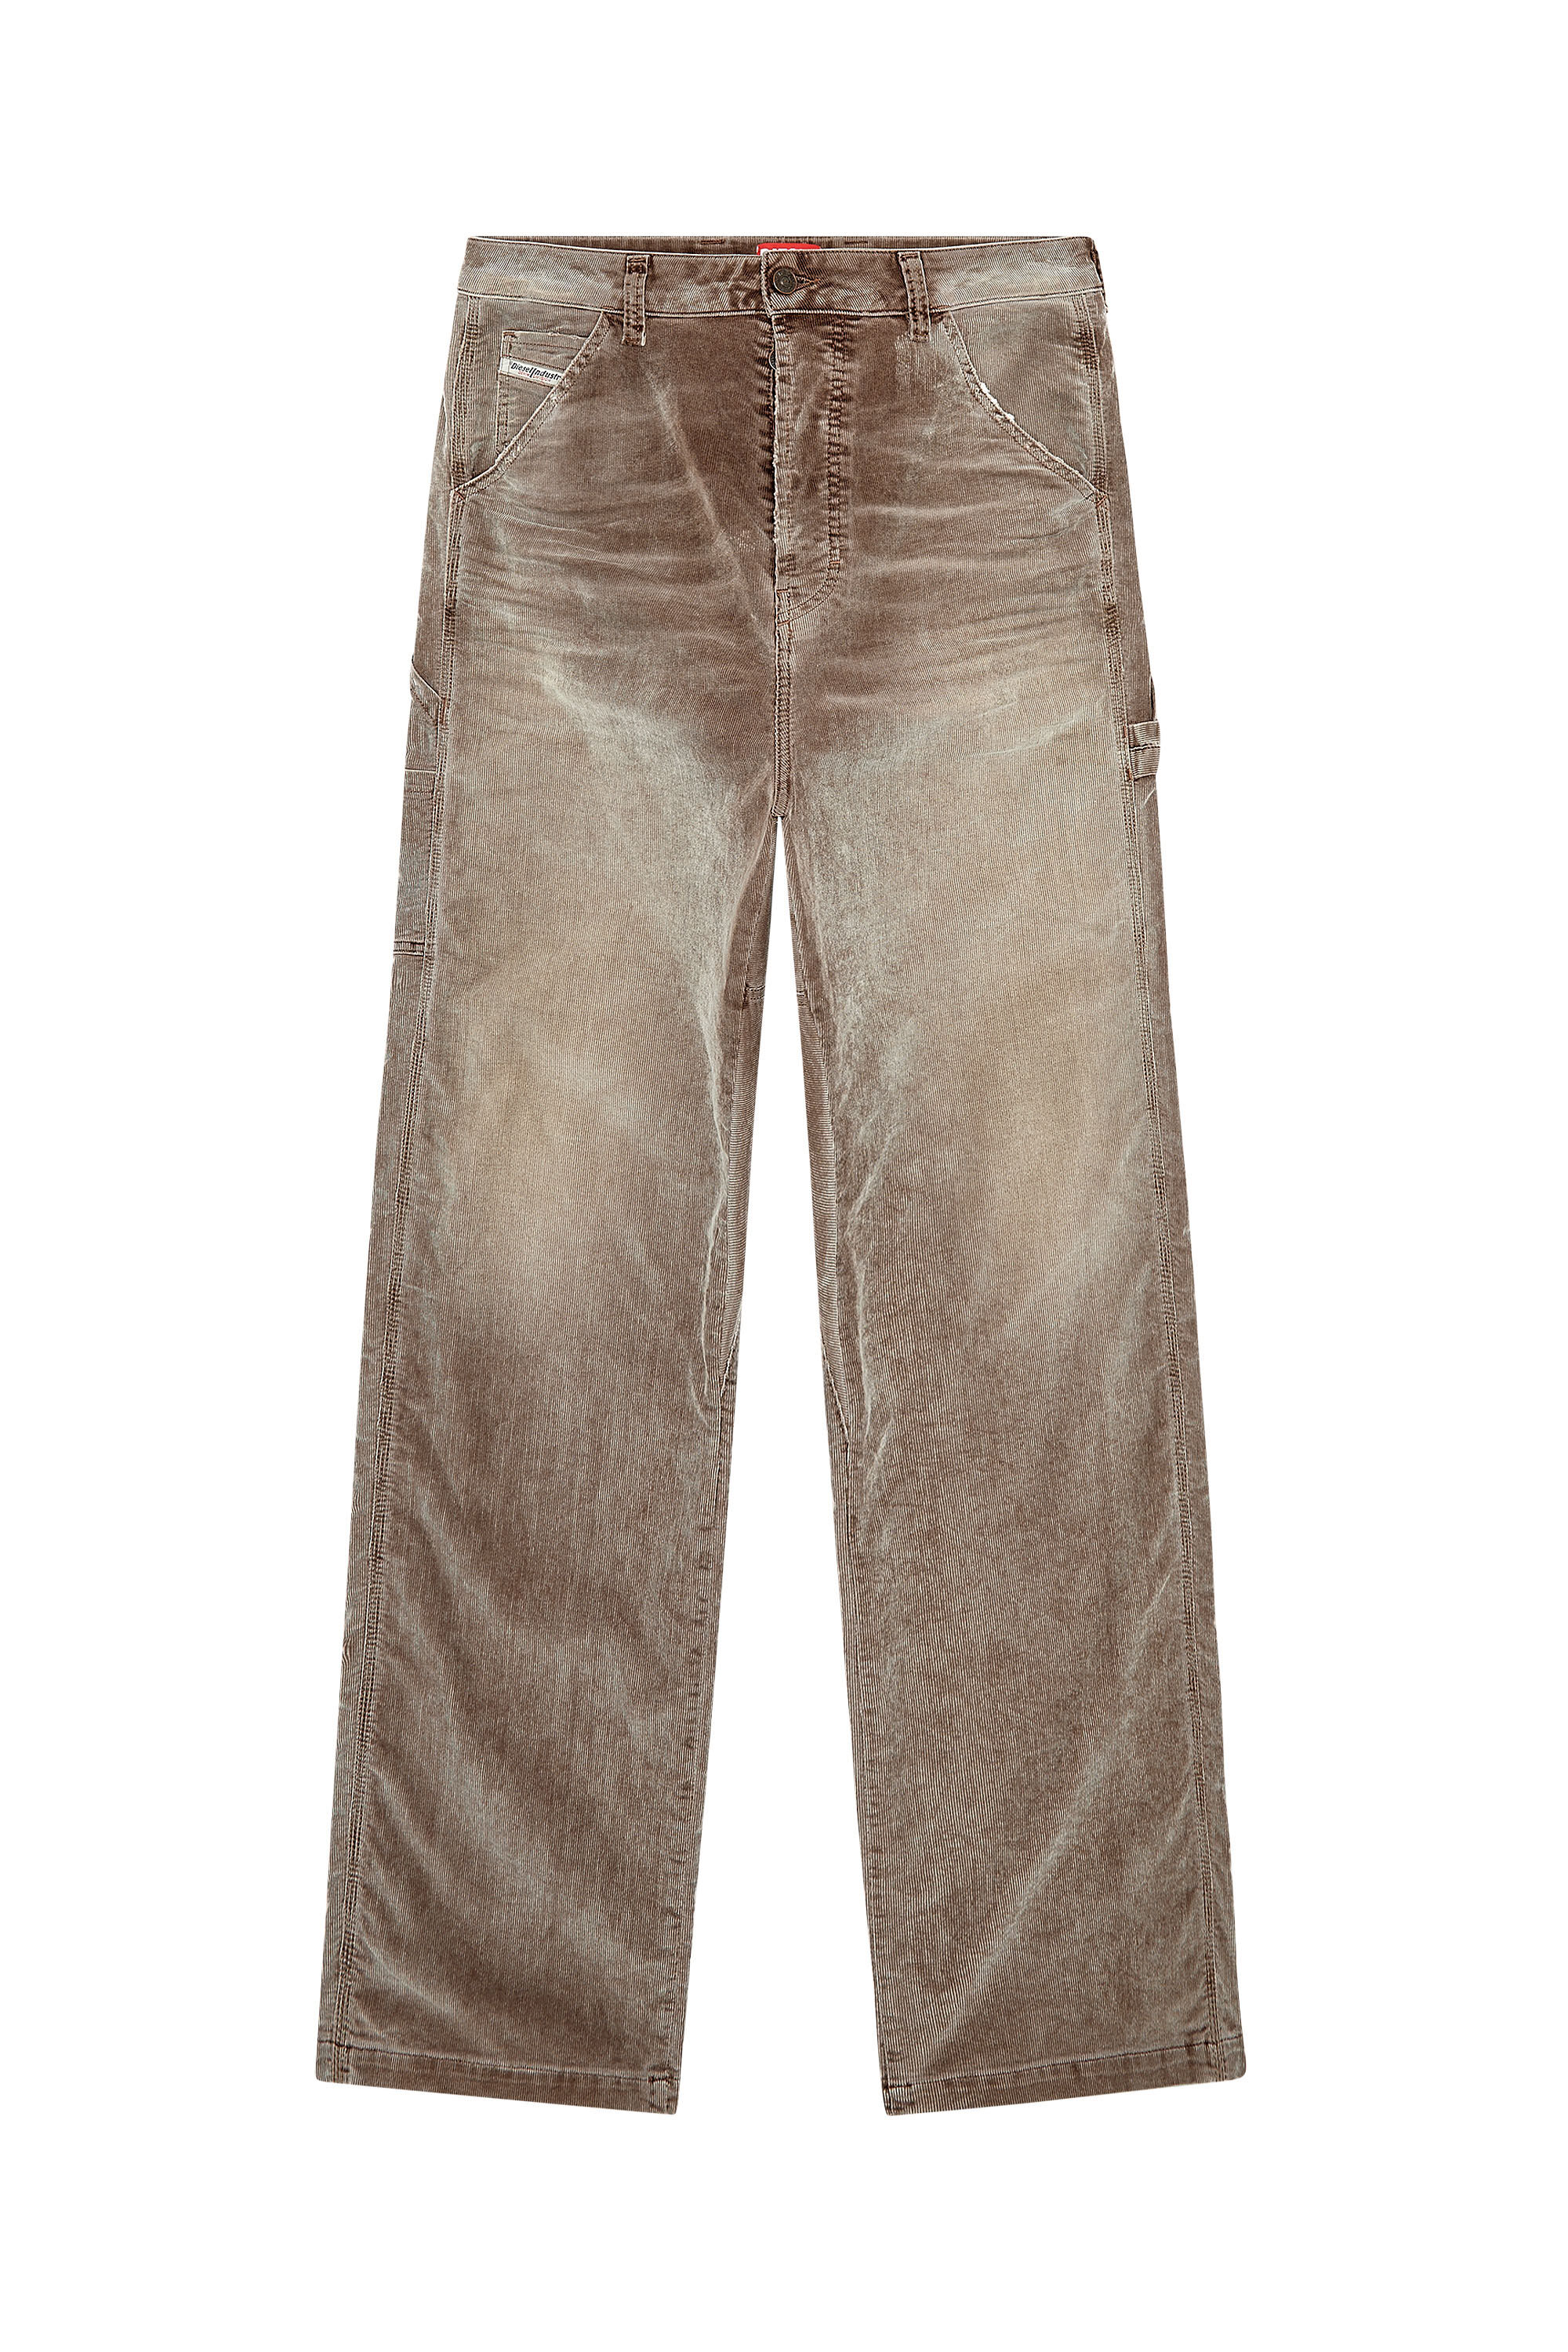 Gap - Brown Textured Bootcut Pants Cotton Spandex Elastane